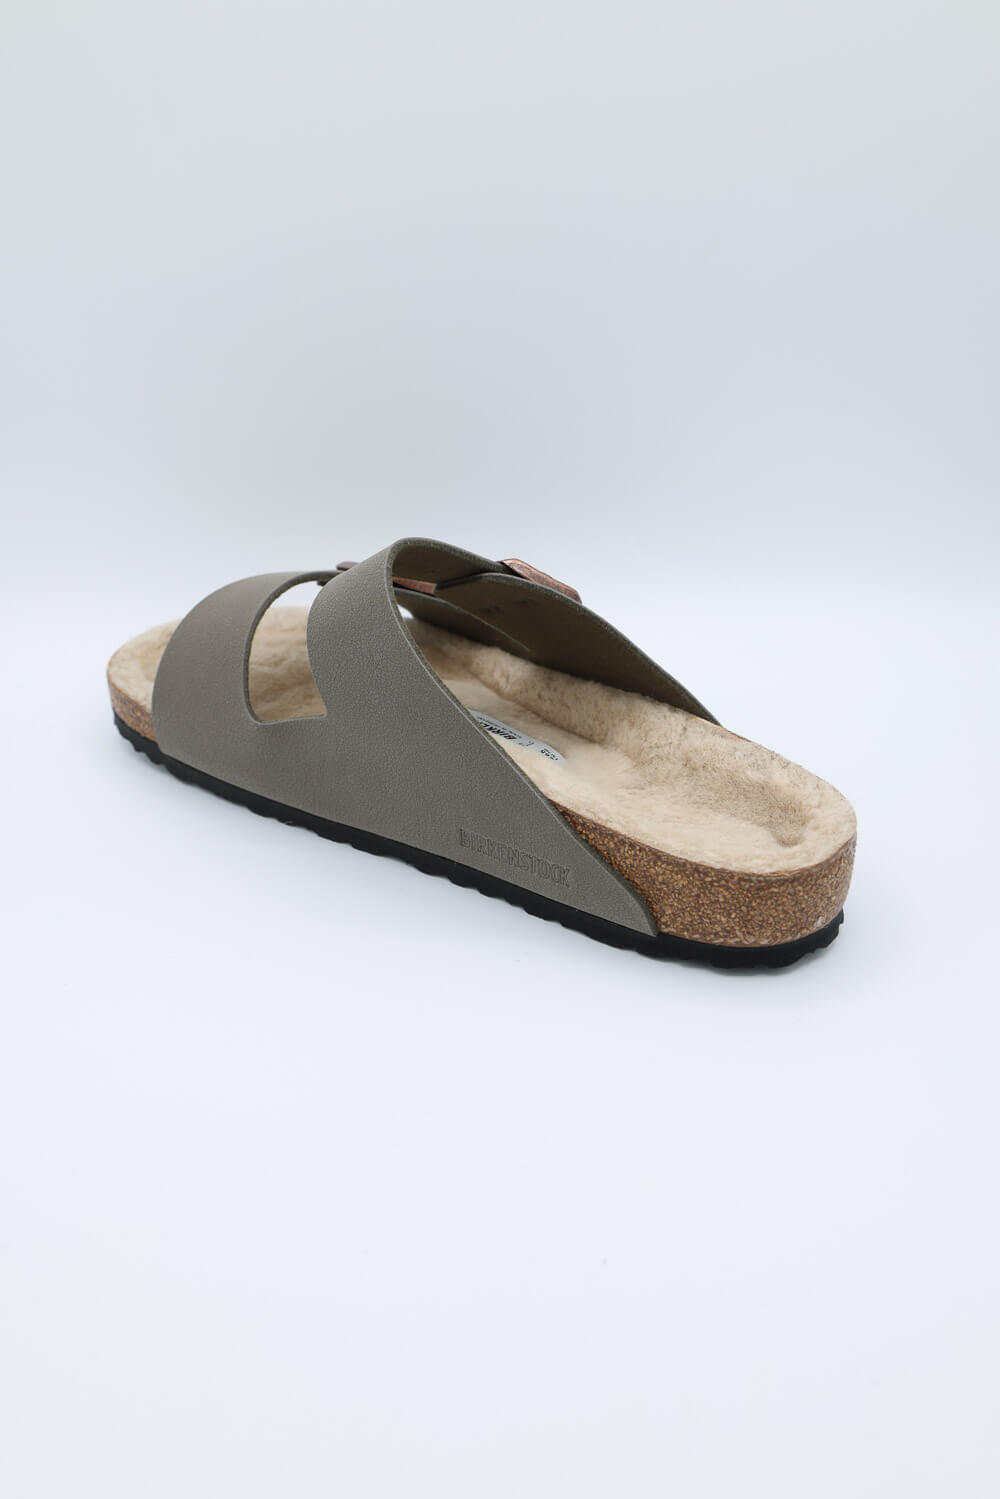 Birkenstock Women's Arizona Shearling Sandals - Mocha